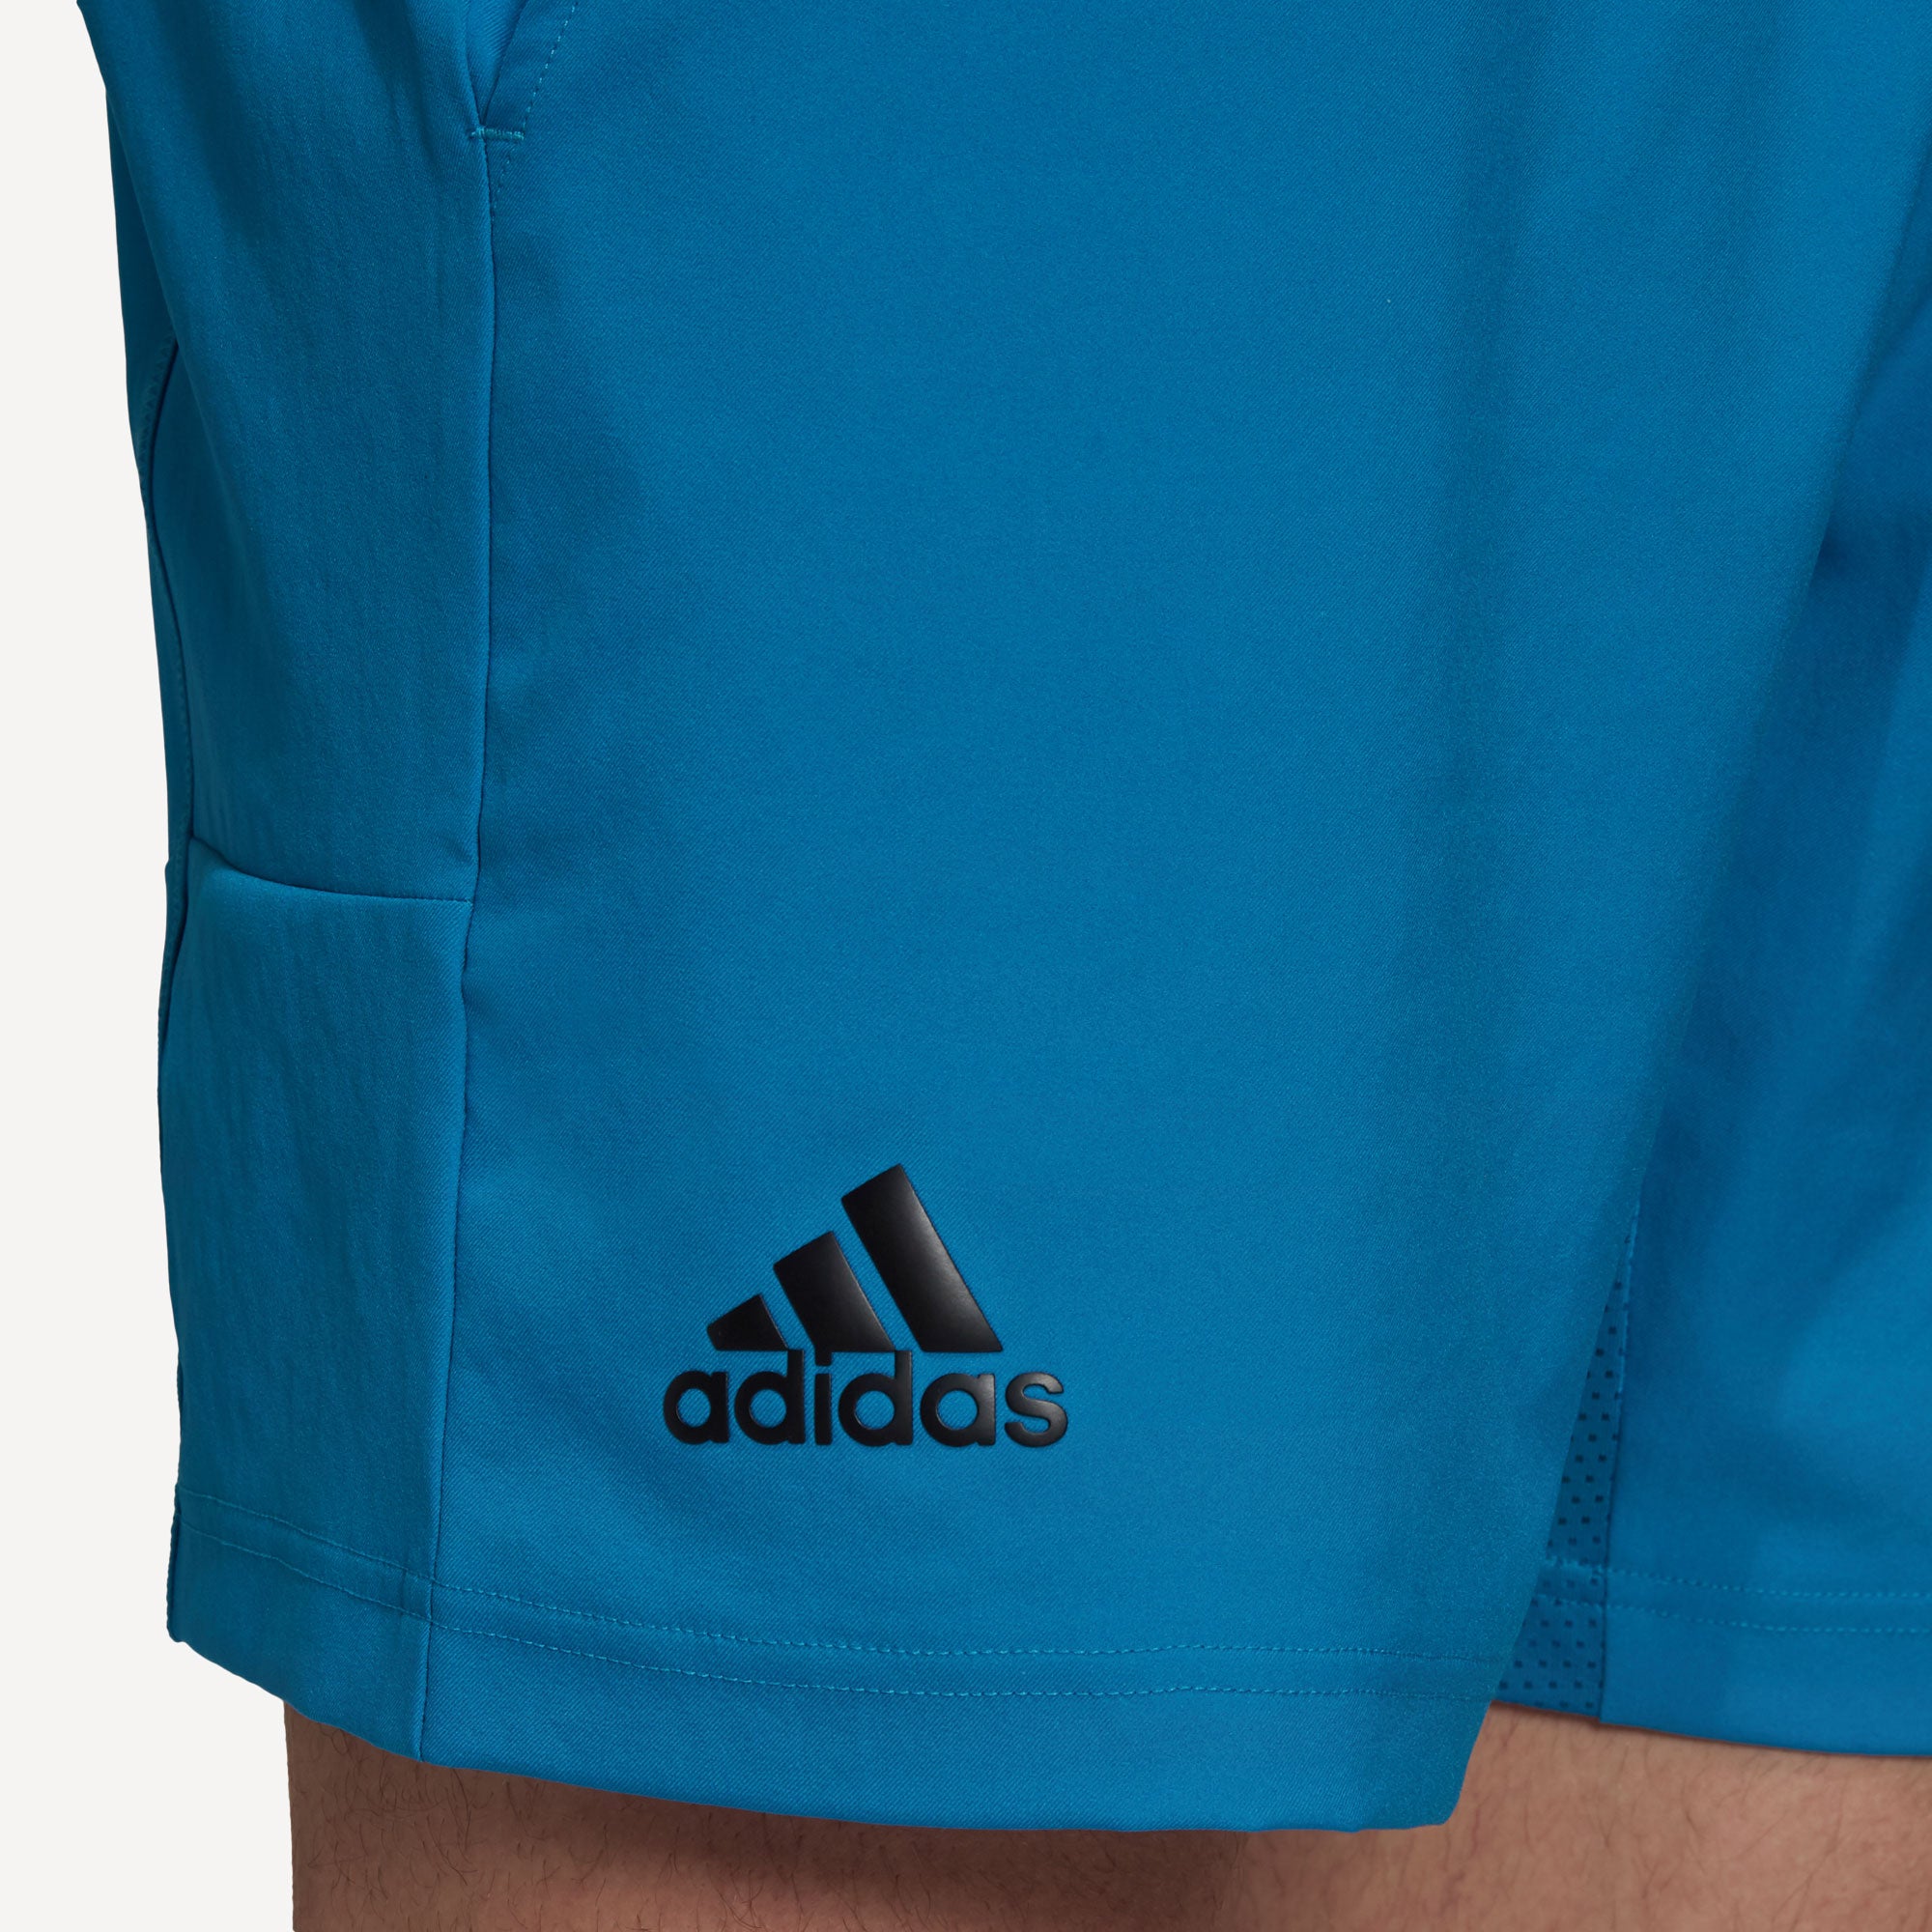 adidas Ergo Primeblue Men's 7-Inch Tennis Shorts Blue (4)